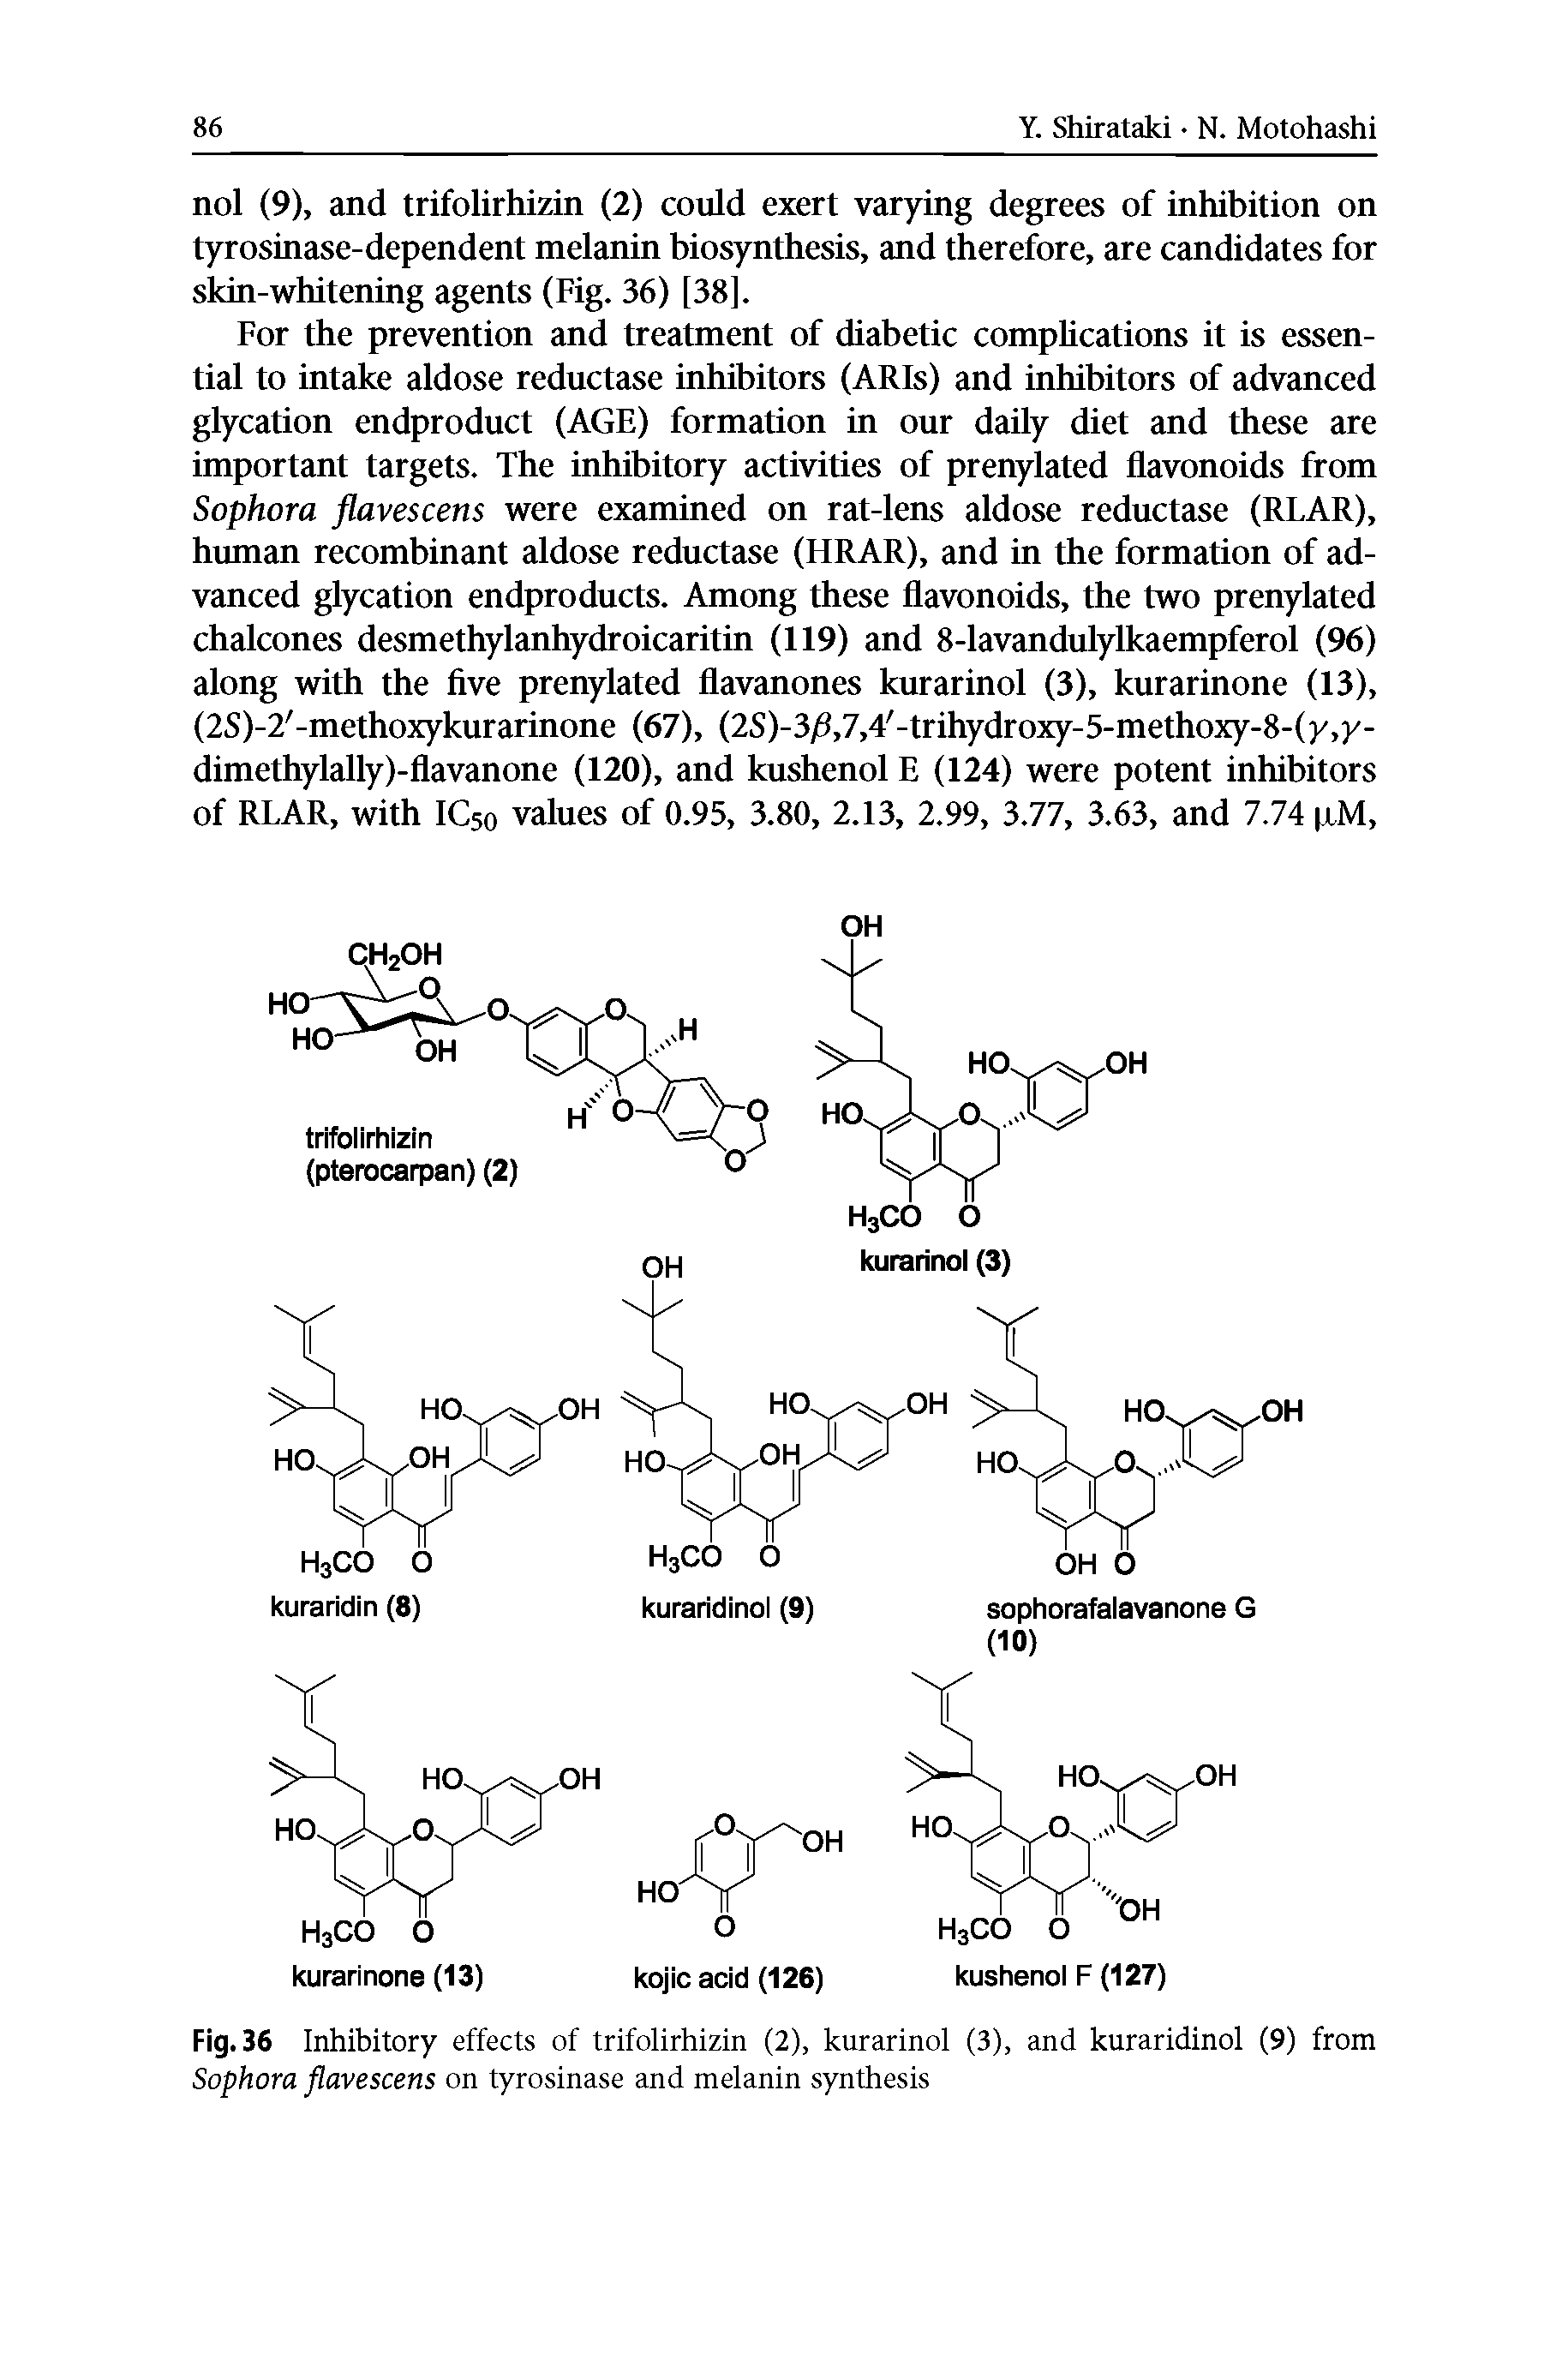 Fig. 36 Inhibitory effects of trifolirhizin (2), kurarinol (3), and kuraridinol (9) from Sophora flavescens on tyrosinase and melanin synthesis...